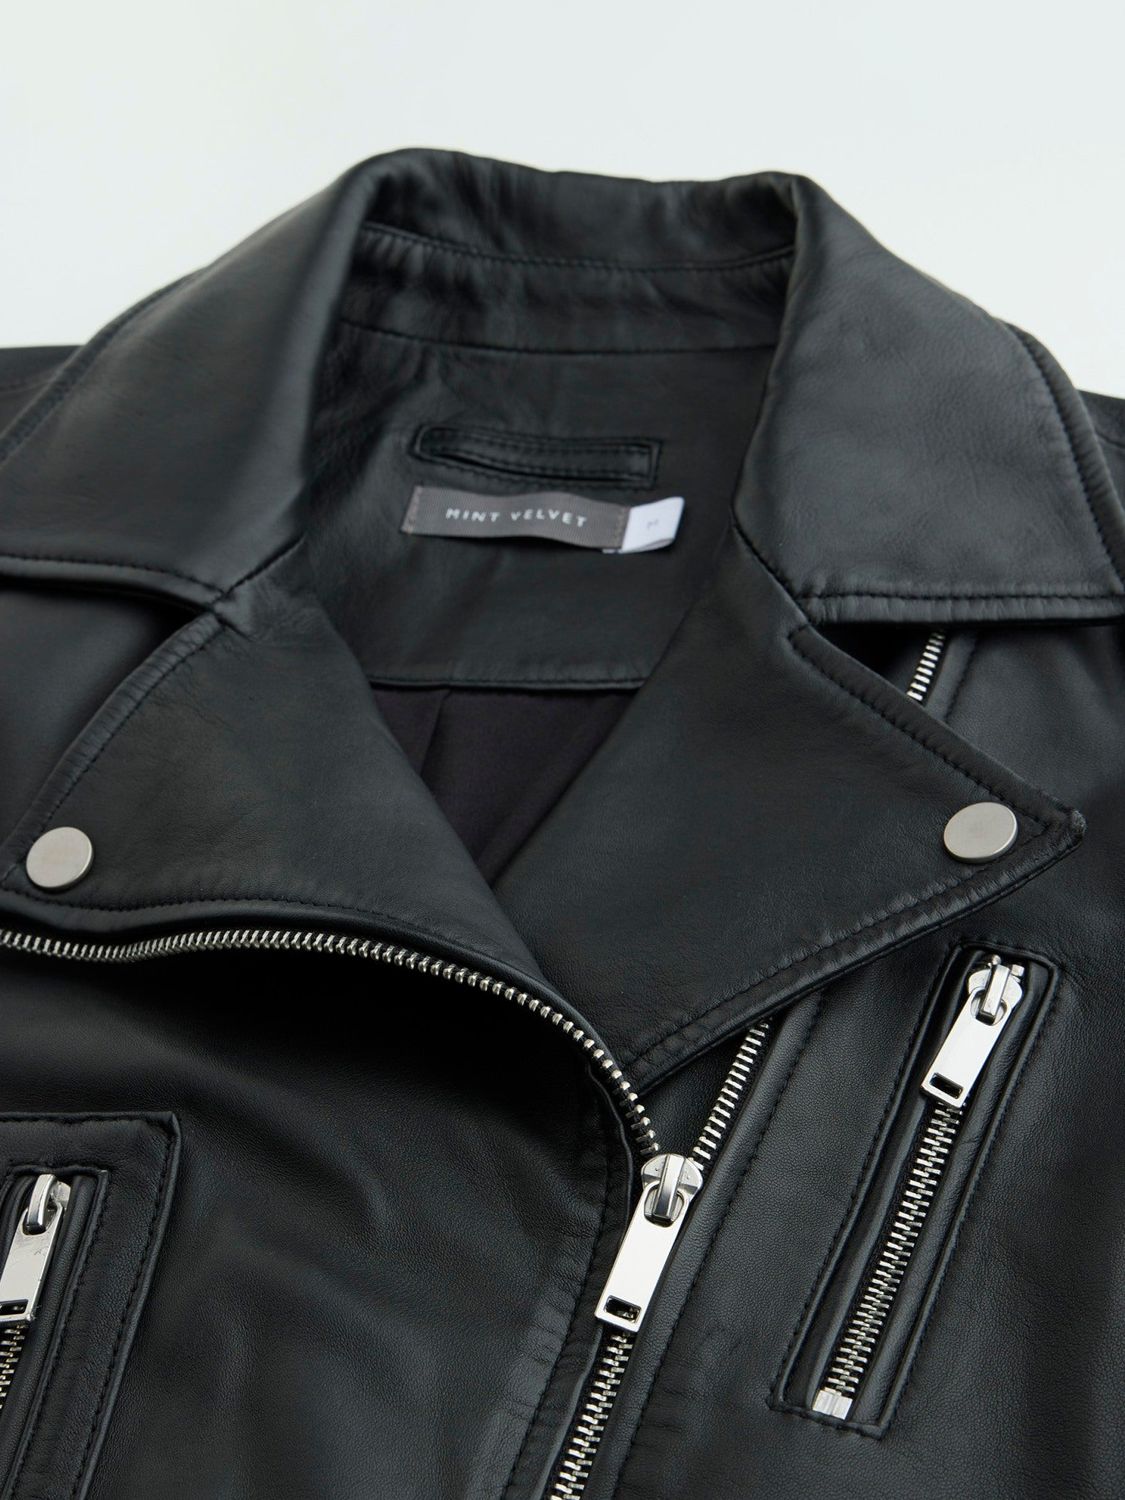 Mint Velvet Leather Biker Jacket, Black at John Lewis & Partners